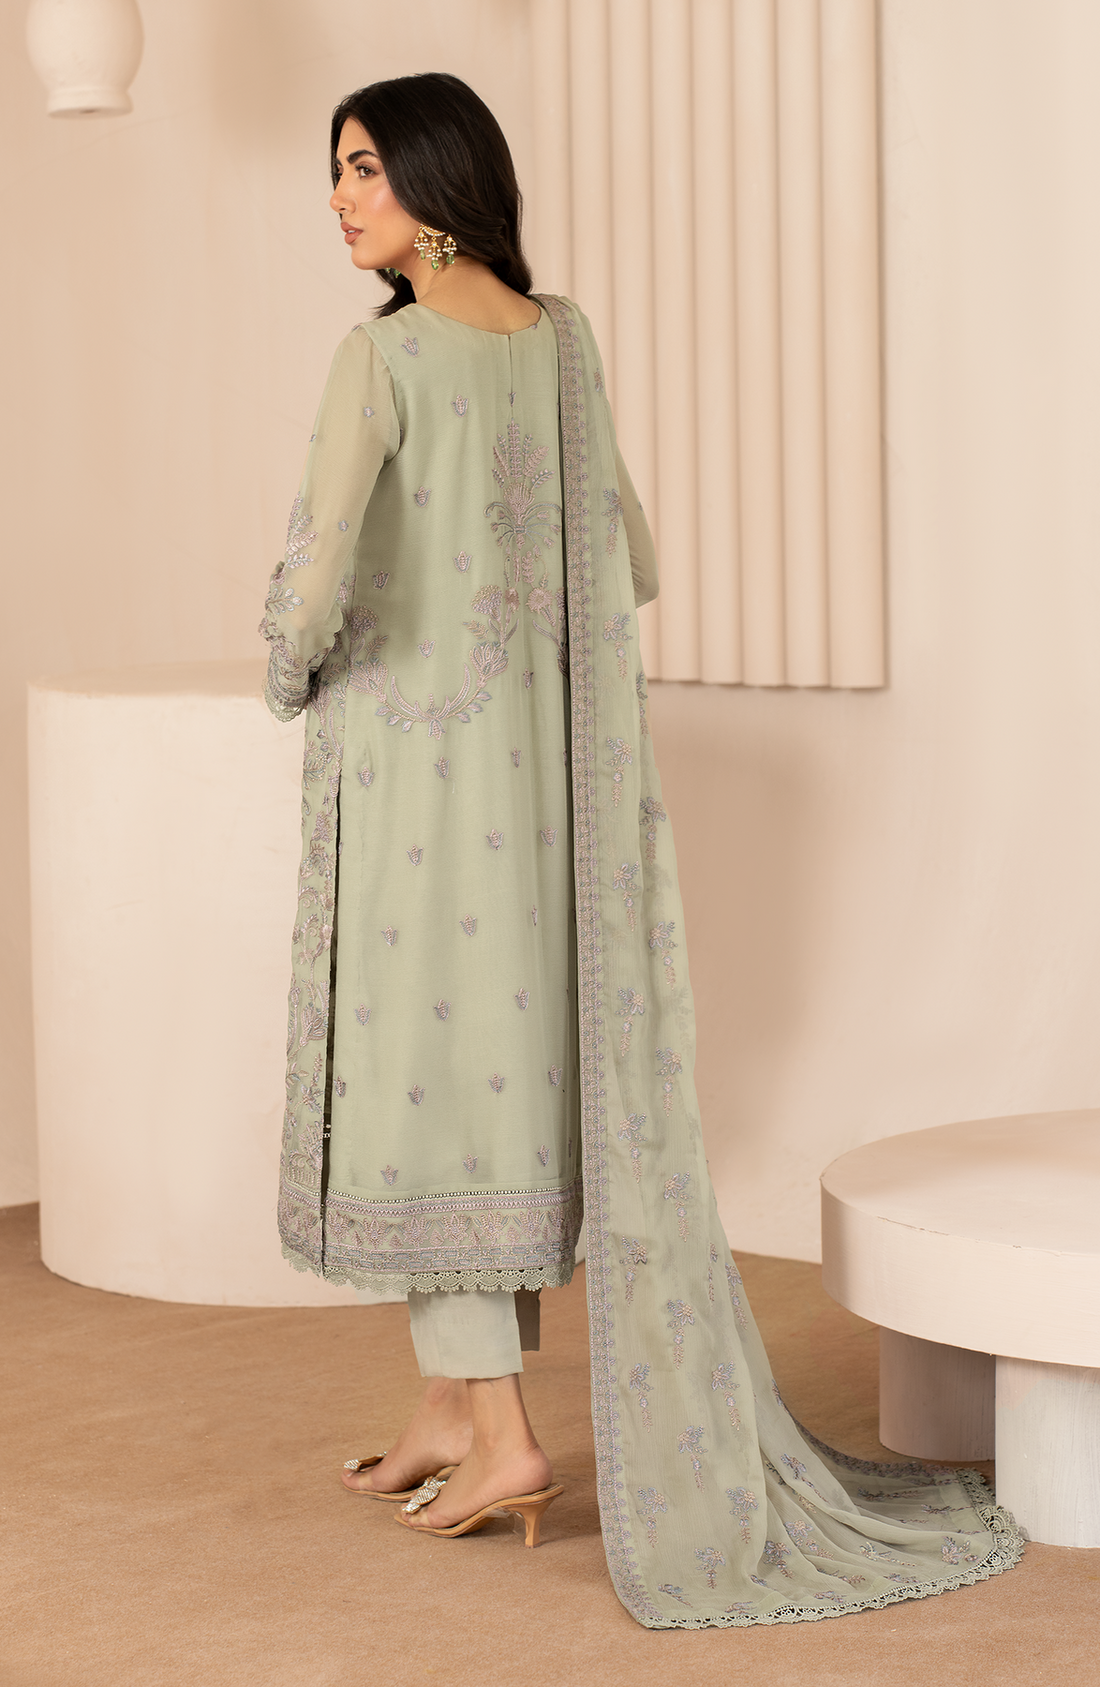 Zarif | Chiffon Edit  | ZL 04 AFSA - Khanumjan  Pakistani Clothes and Designer Dresses in UK, USA 